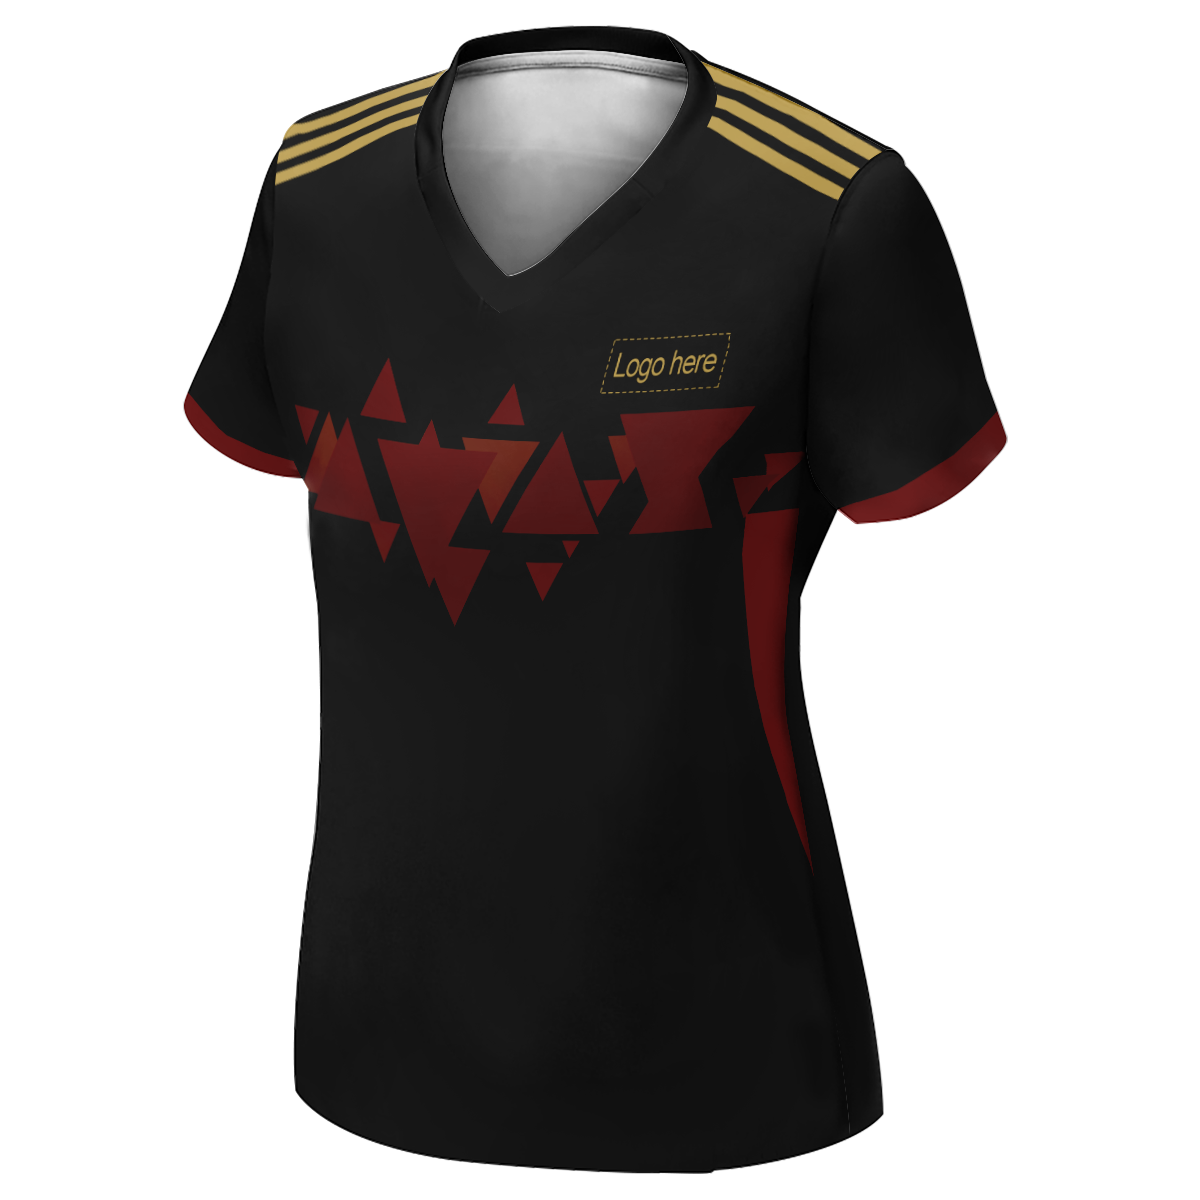 Frauen Split Belgien WM Custom Soccer Jersey mit Namen